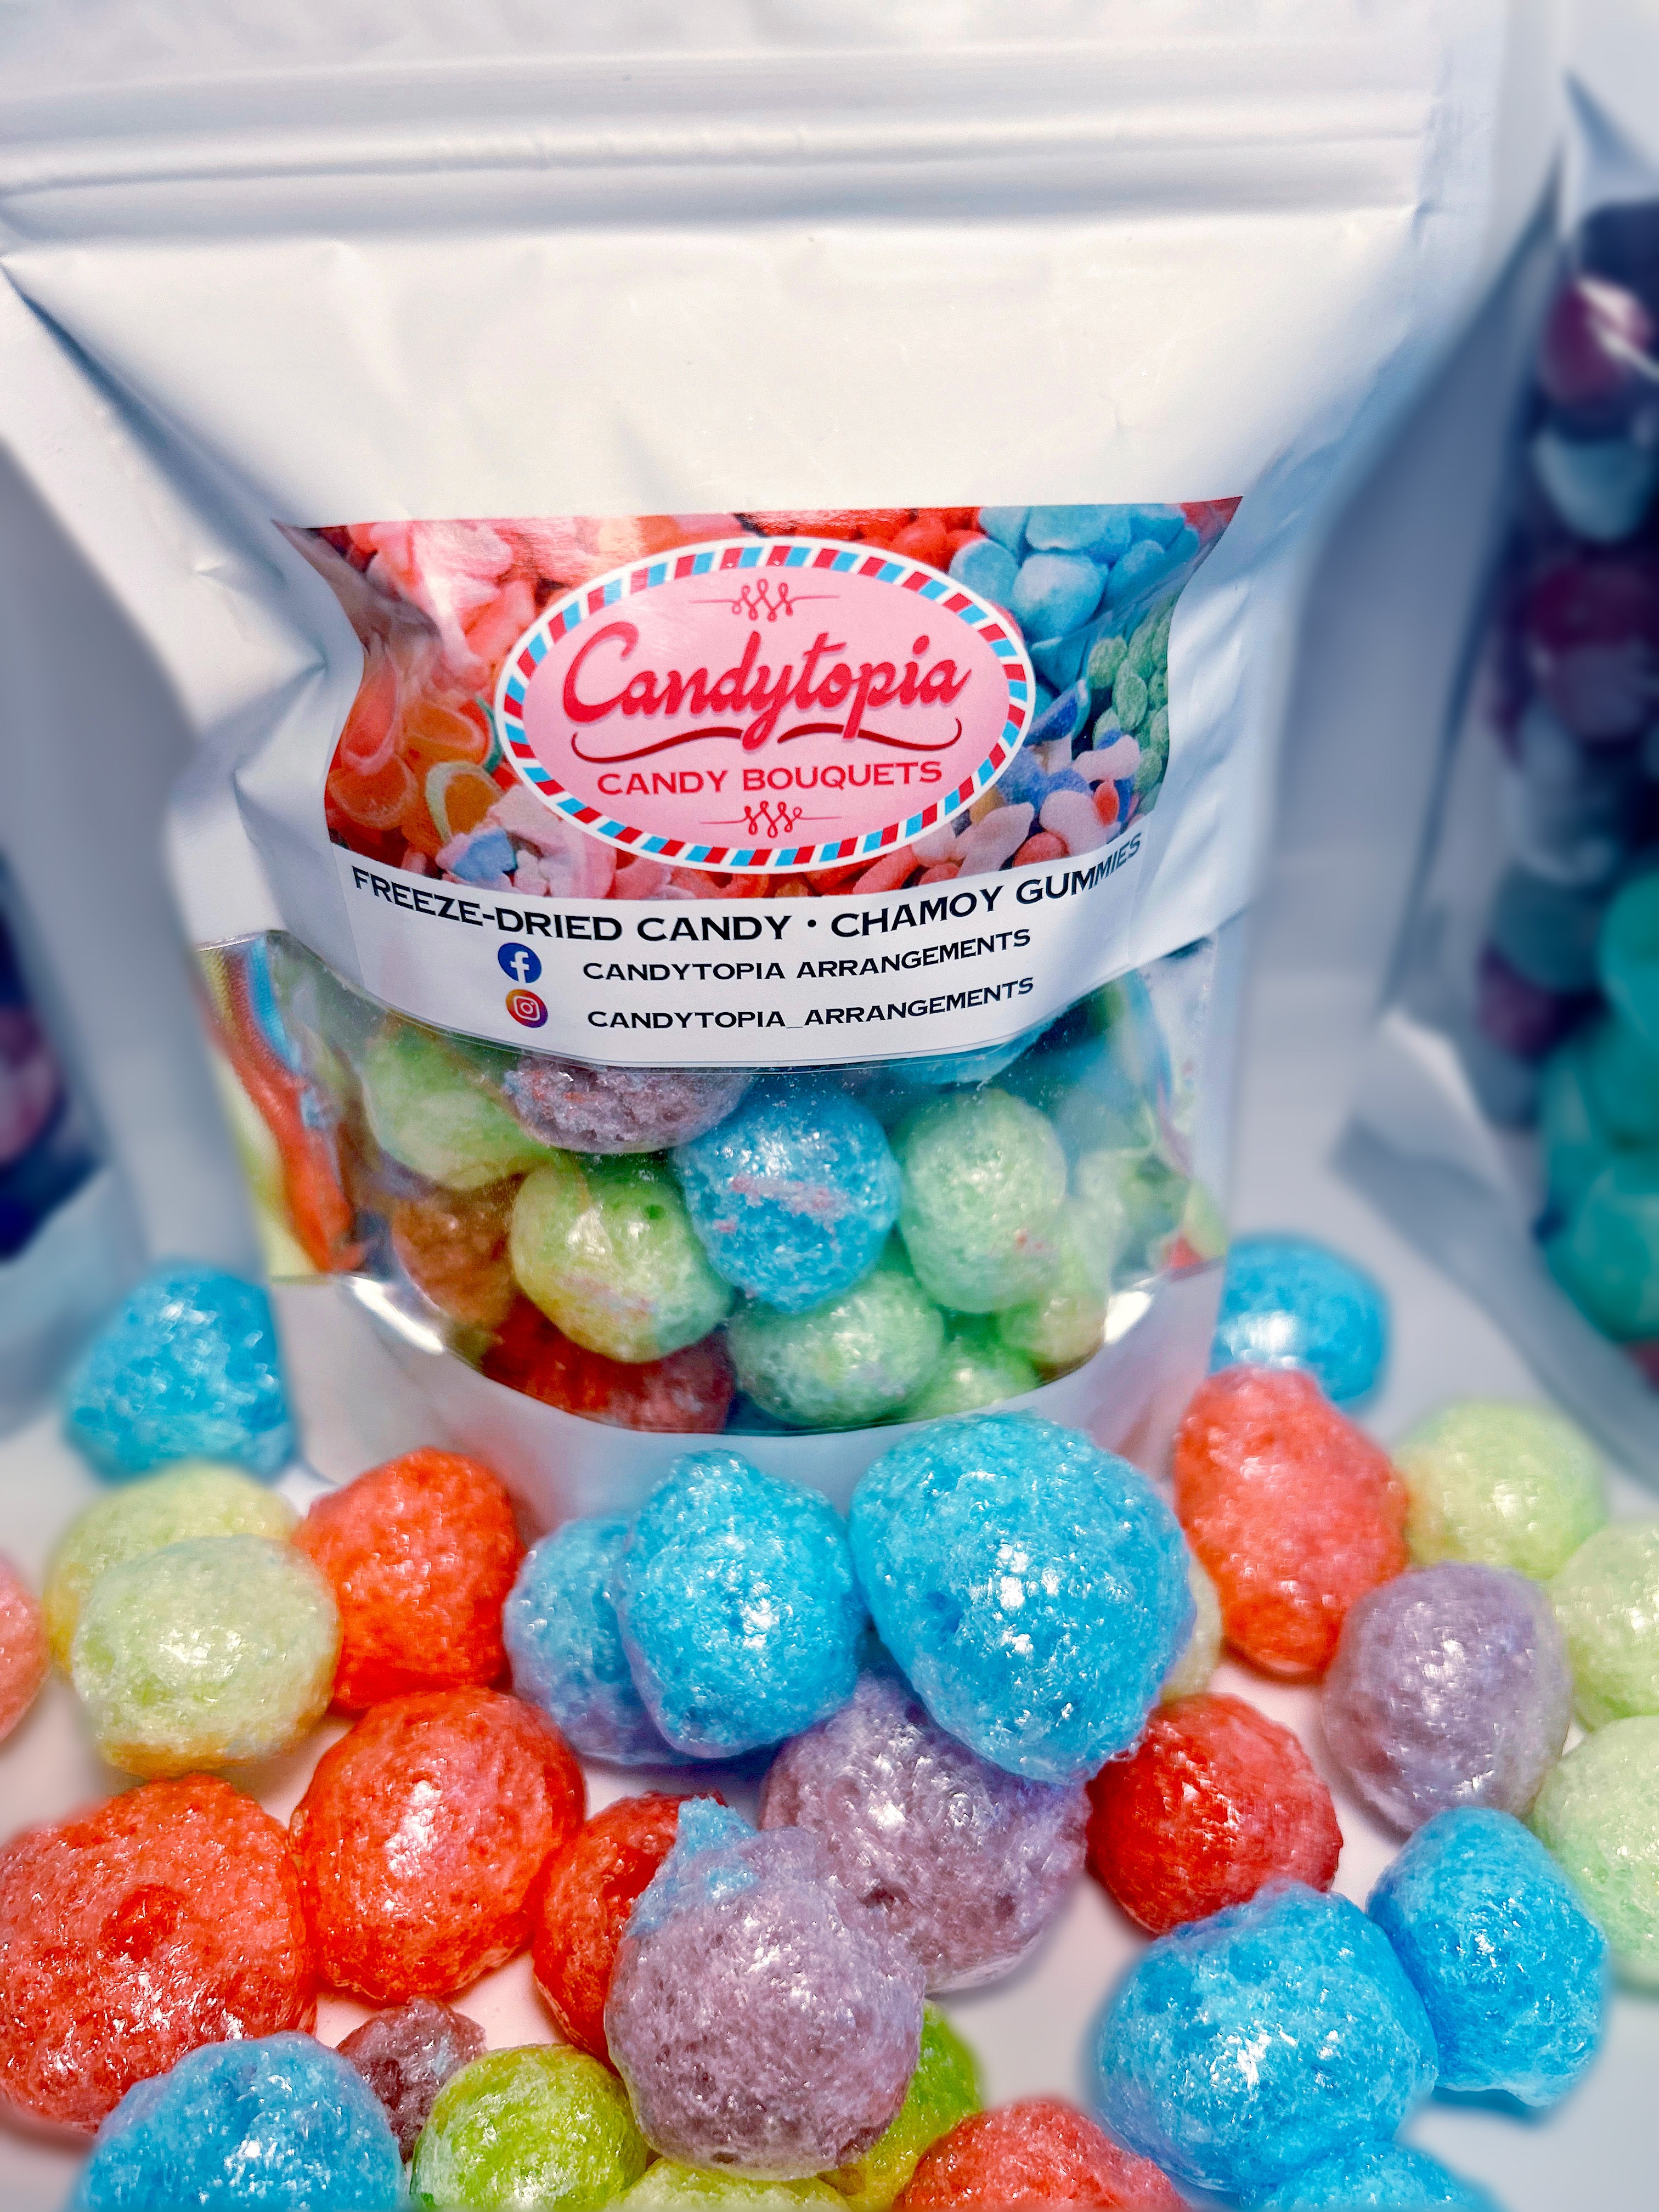 Proceso de nuestros dulces liofilizados 🪐👽✨ #freezedriedcandy #dulce